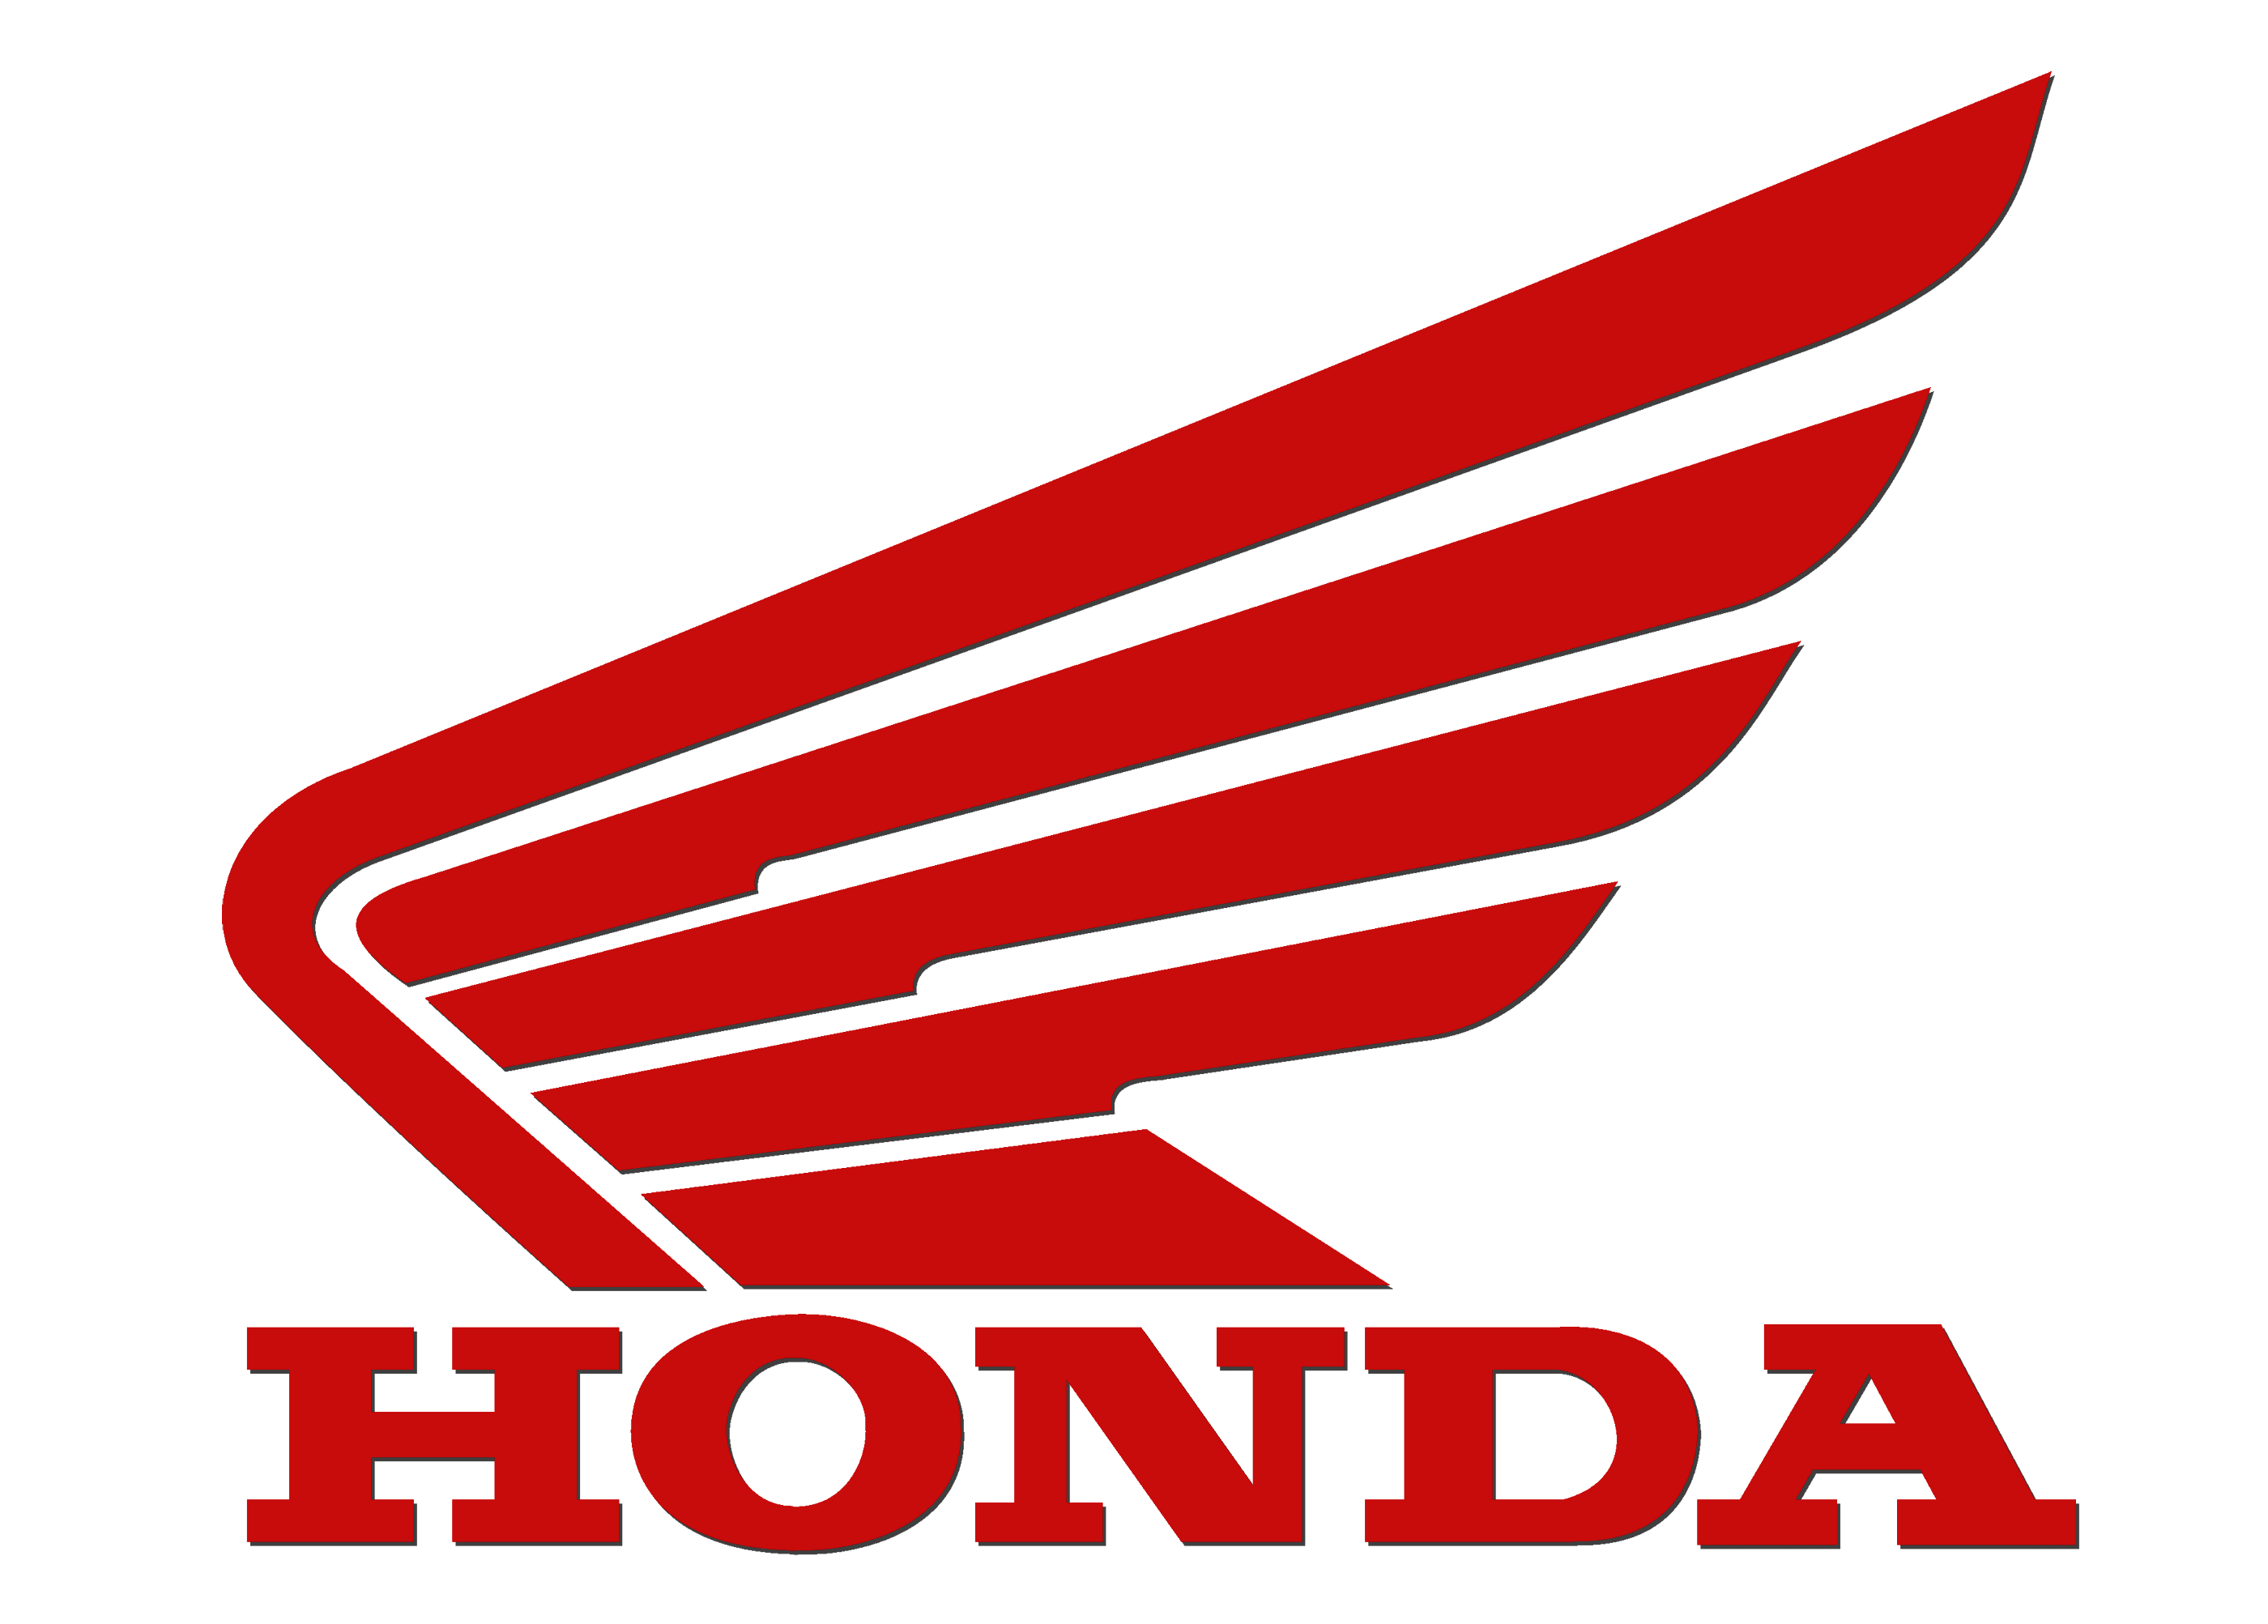 Old Honda Motorcycle Logo - Honda logo | Motorcycle Brands